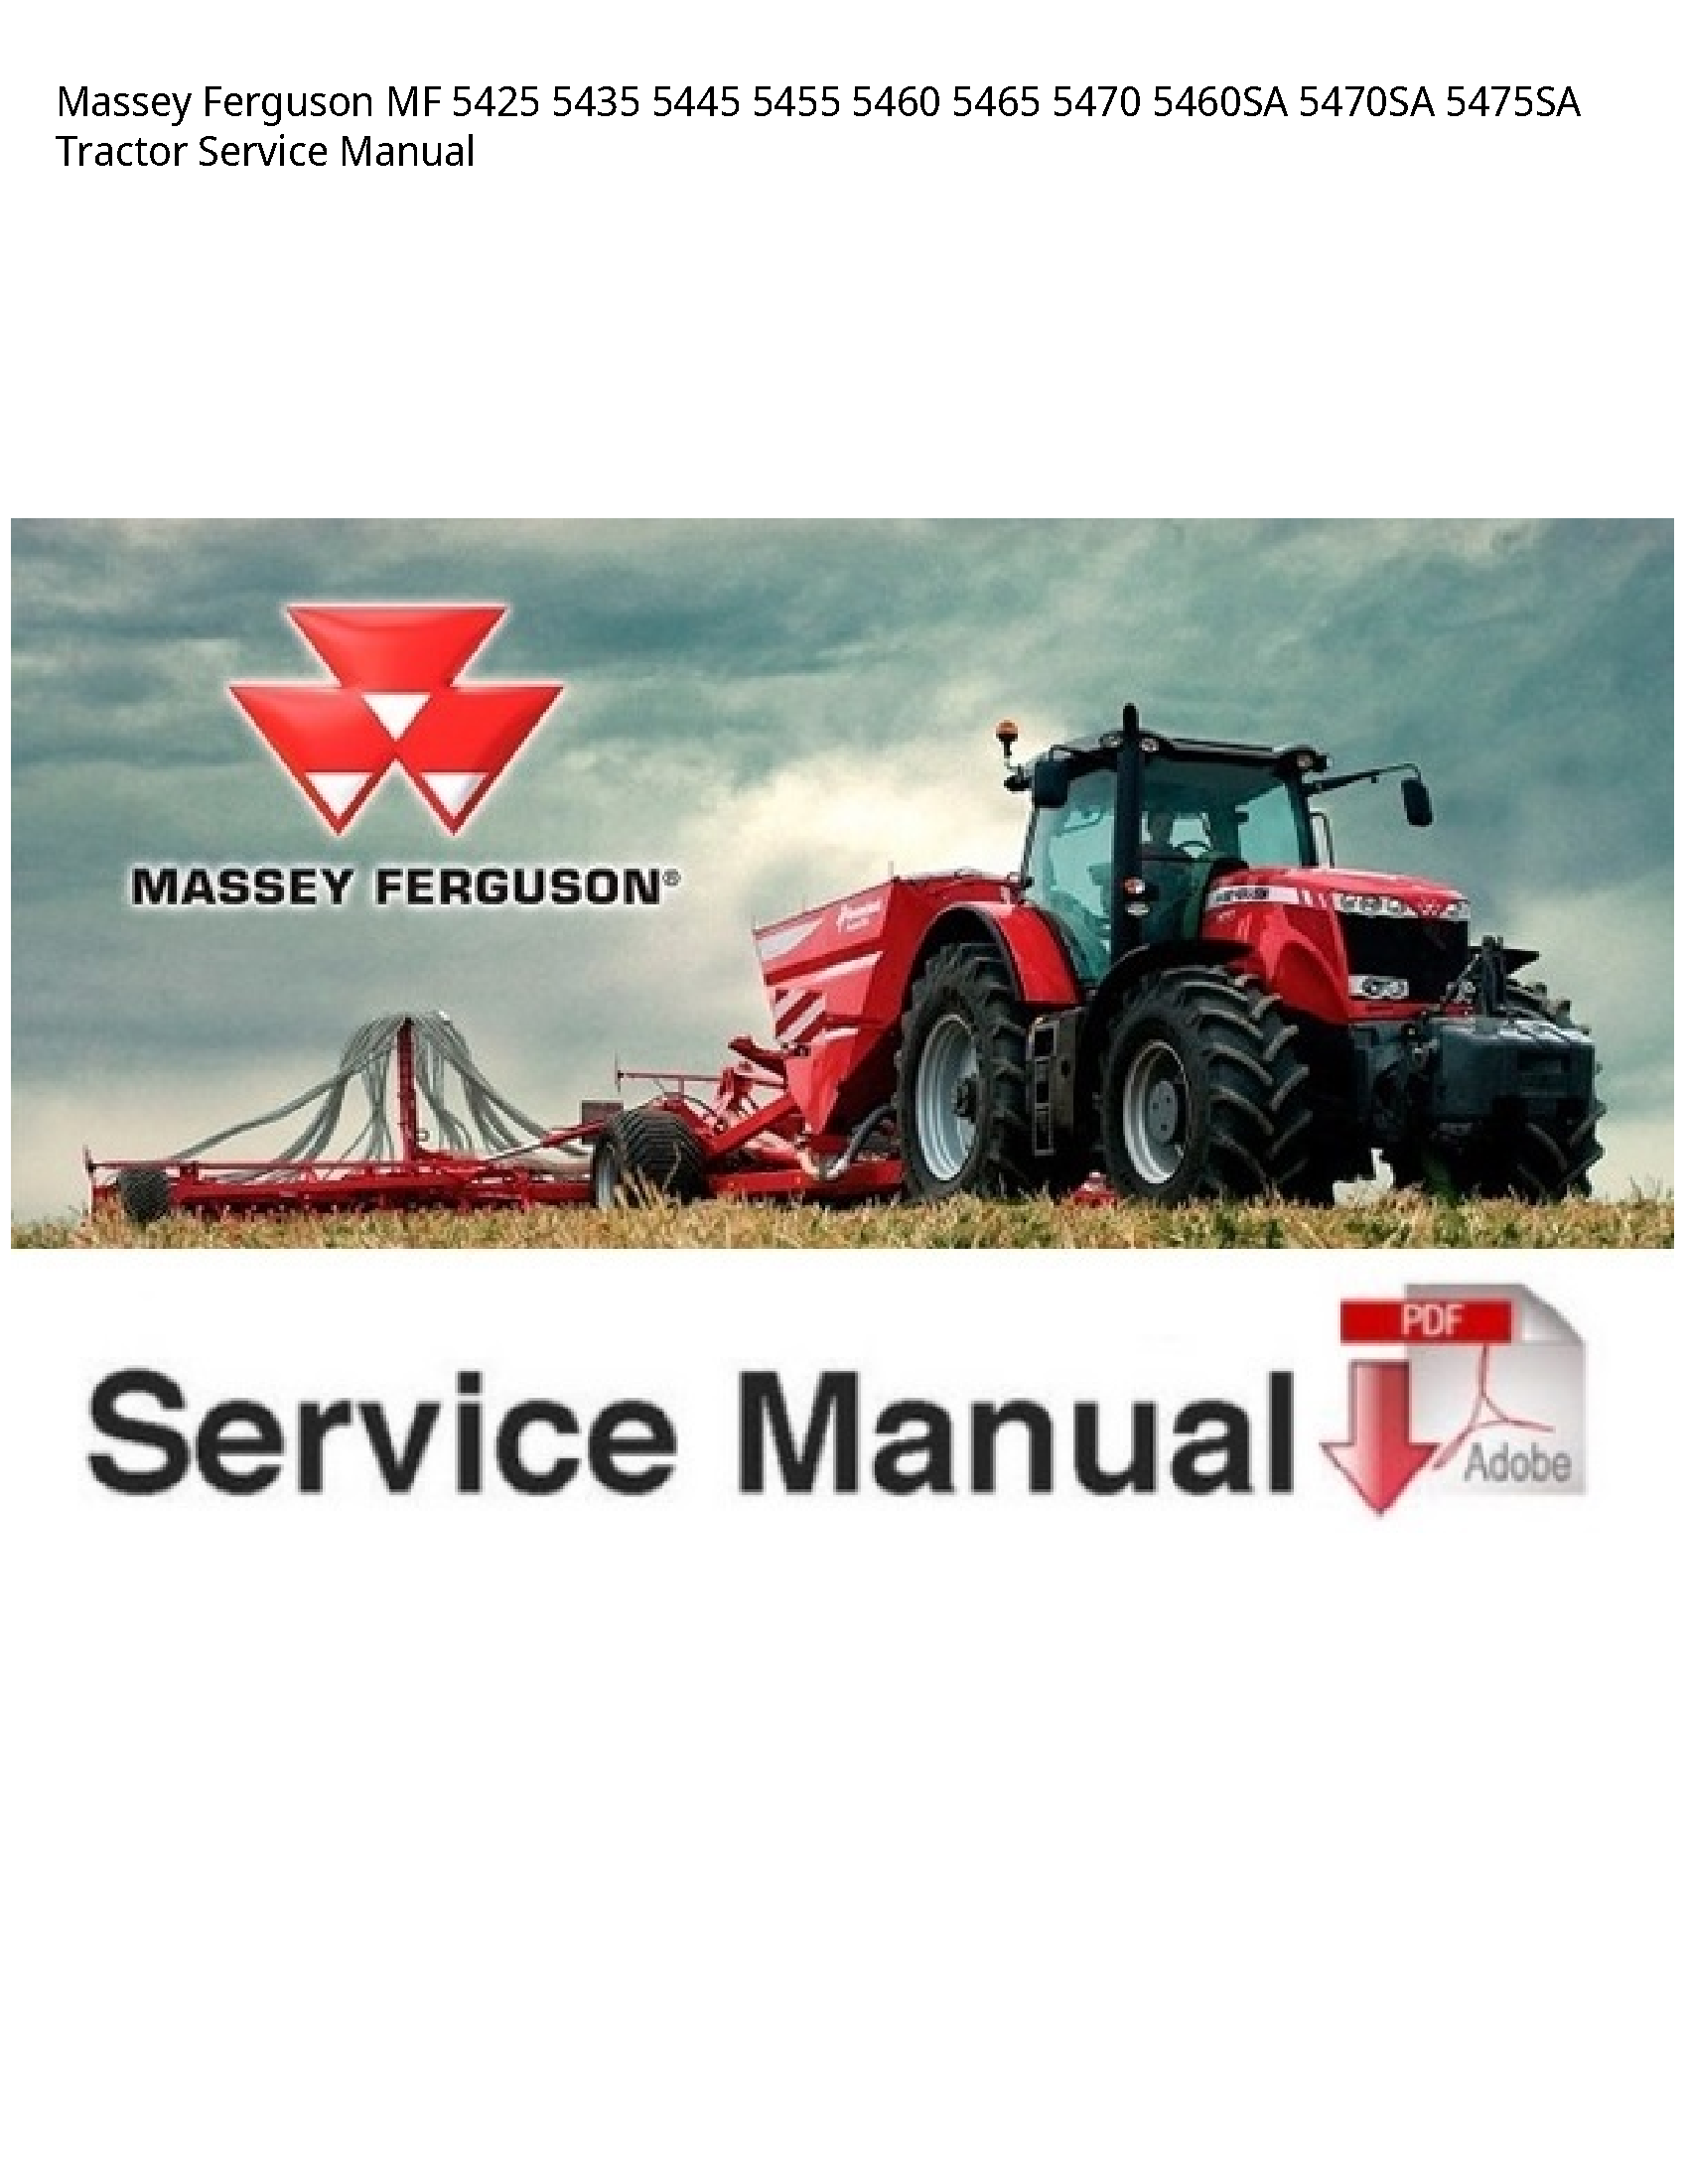 Massey Ferguson 5425 MF Tractor Service manual